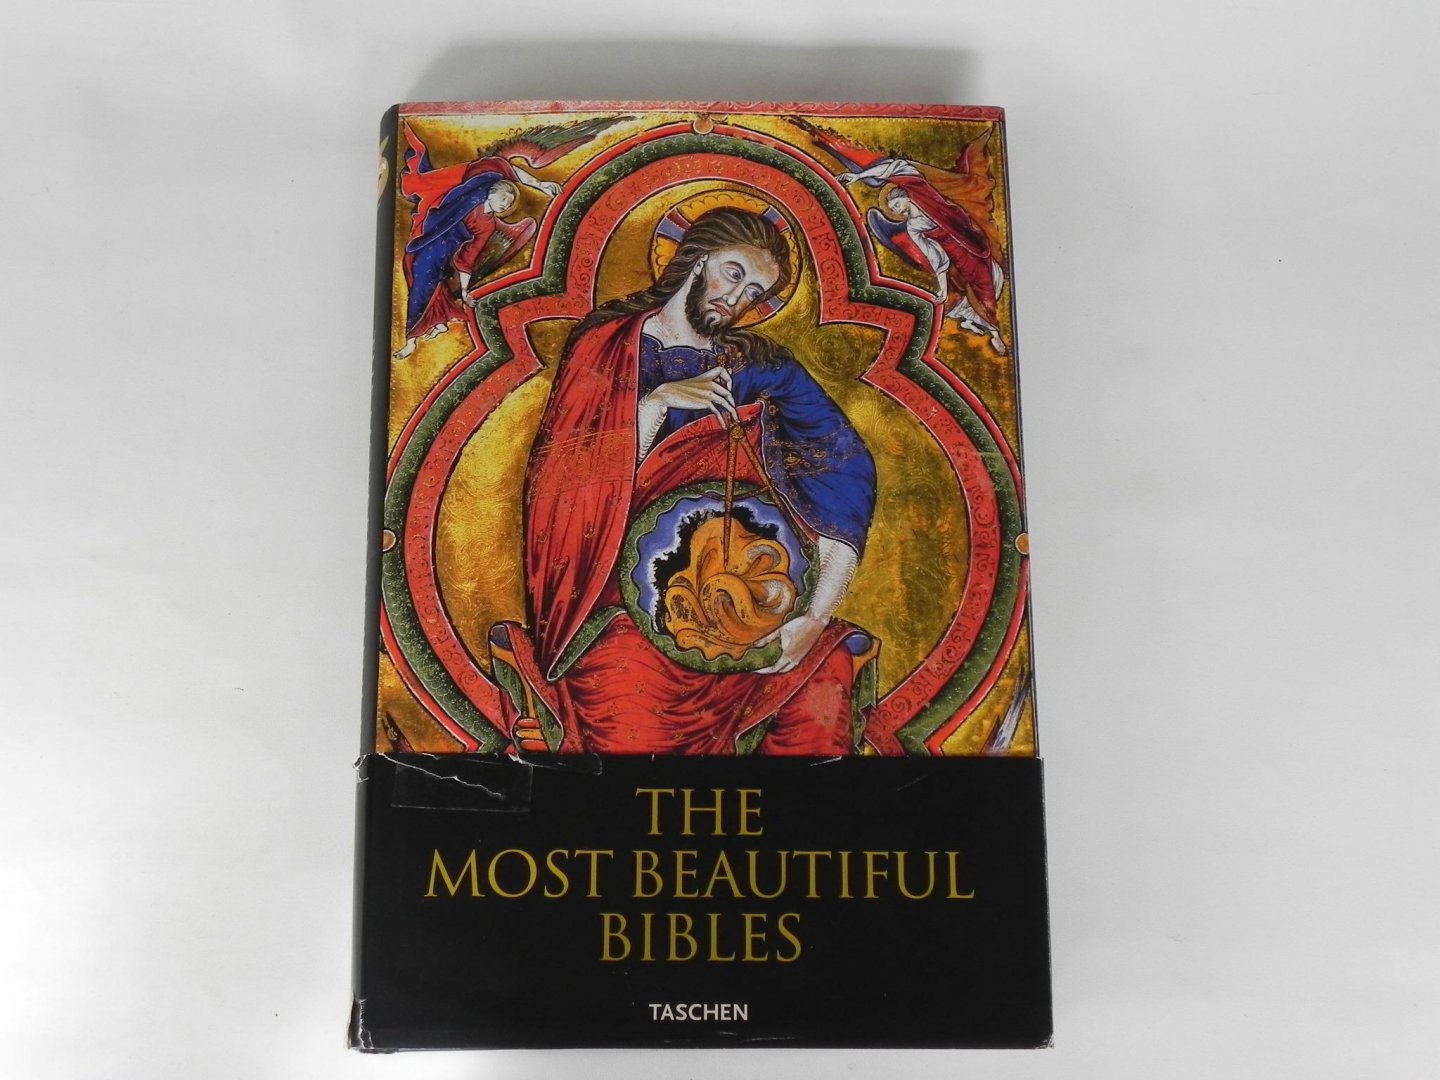 Fingernagel, Andreas & Christian Gastgeber - The most beautiful Bibles (Österreichische Nationalbibliothek)